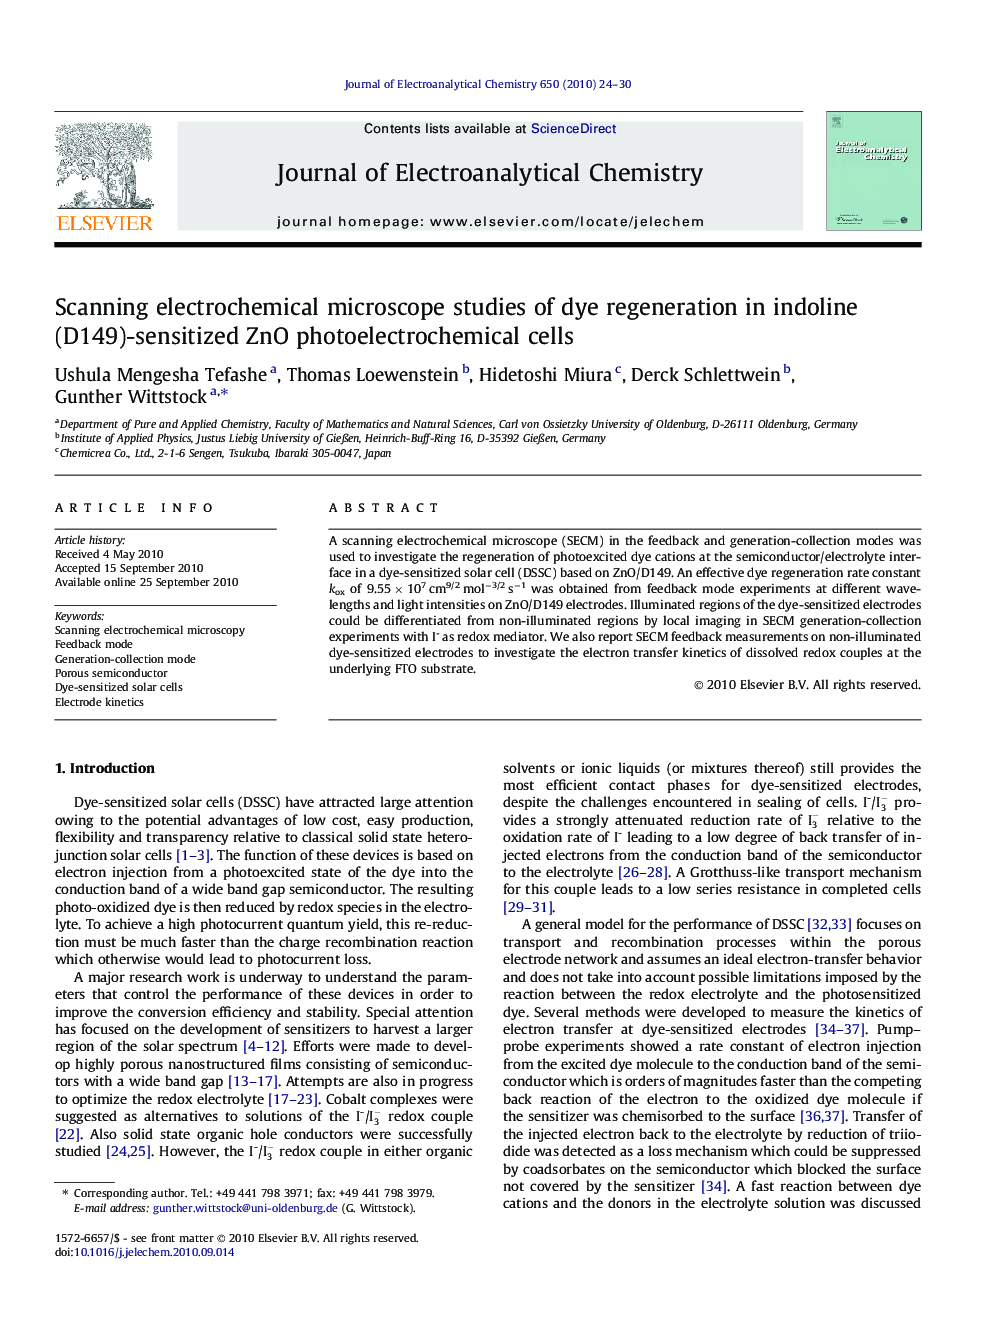 Scanning electrochemical microscope studies of dye regeneration in indoline (D149)-sensitized ZnO photoelectrochemical cells